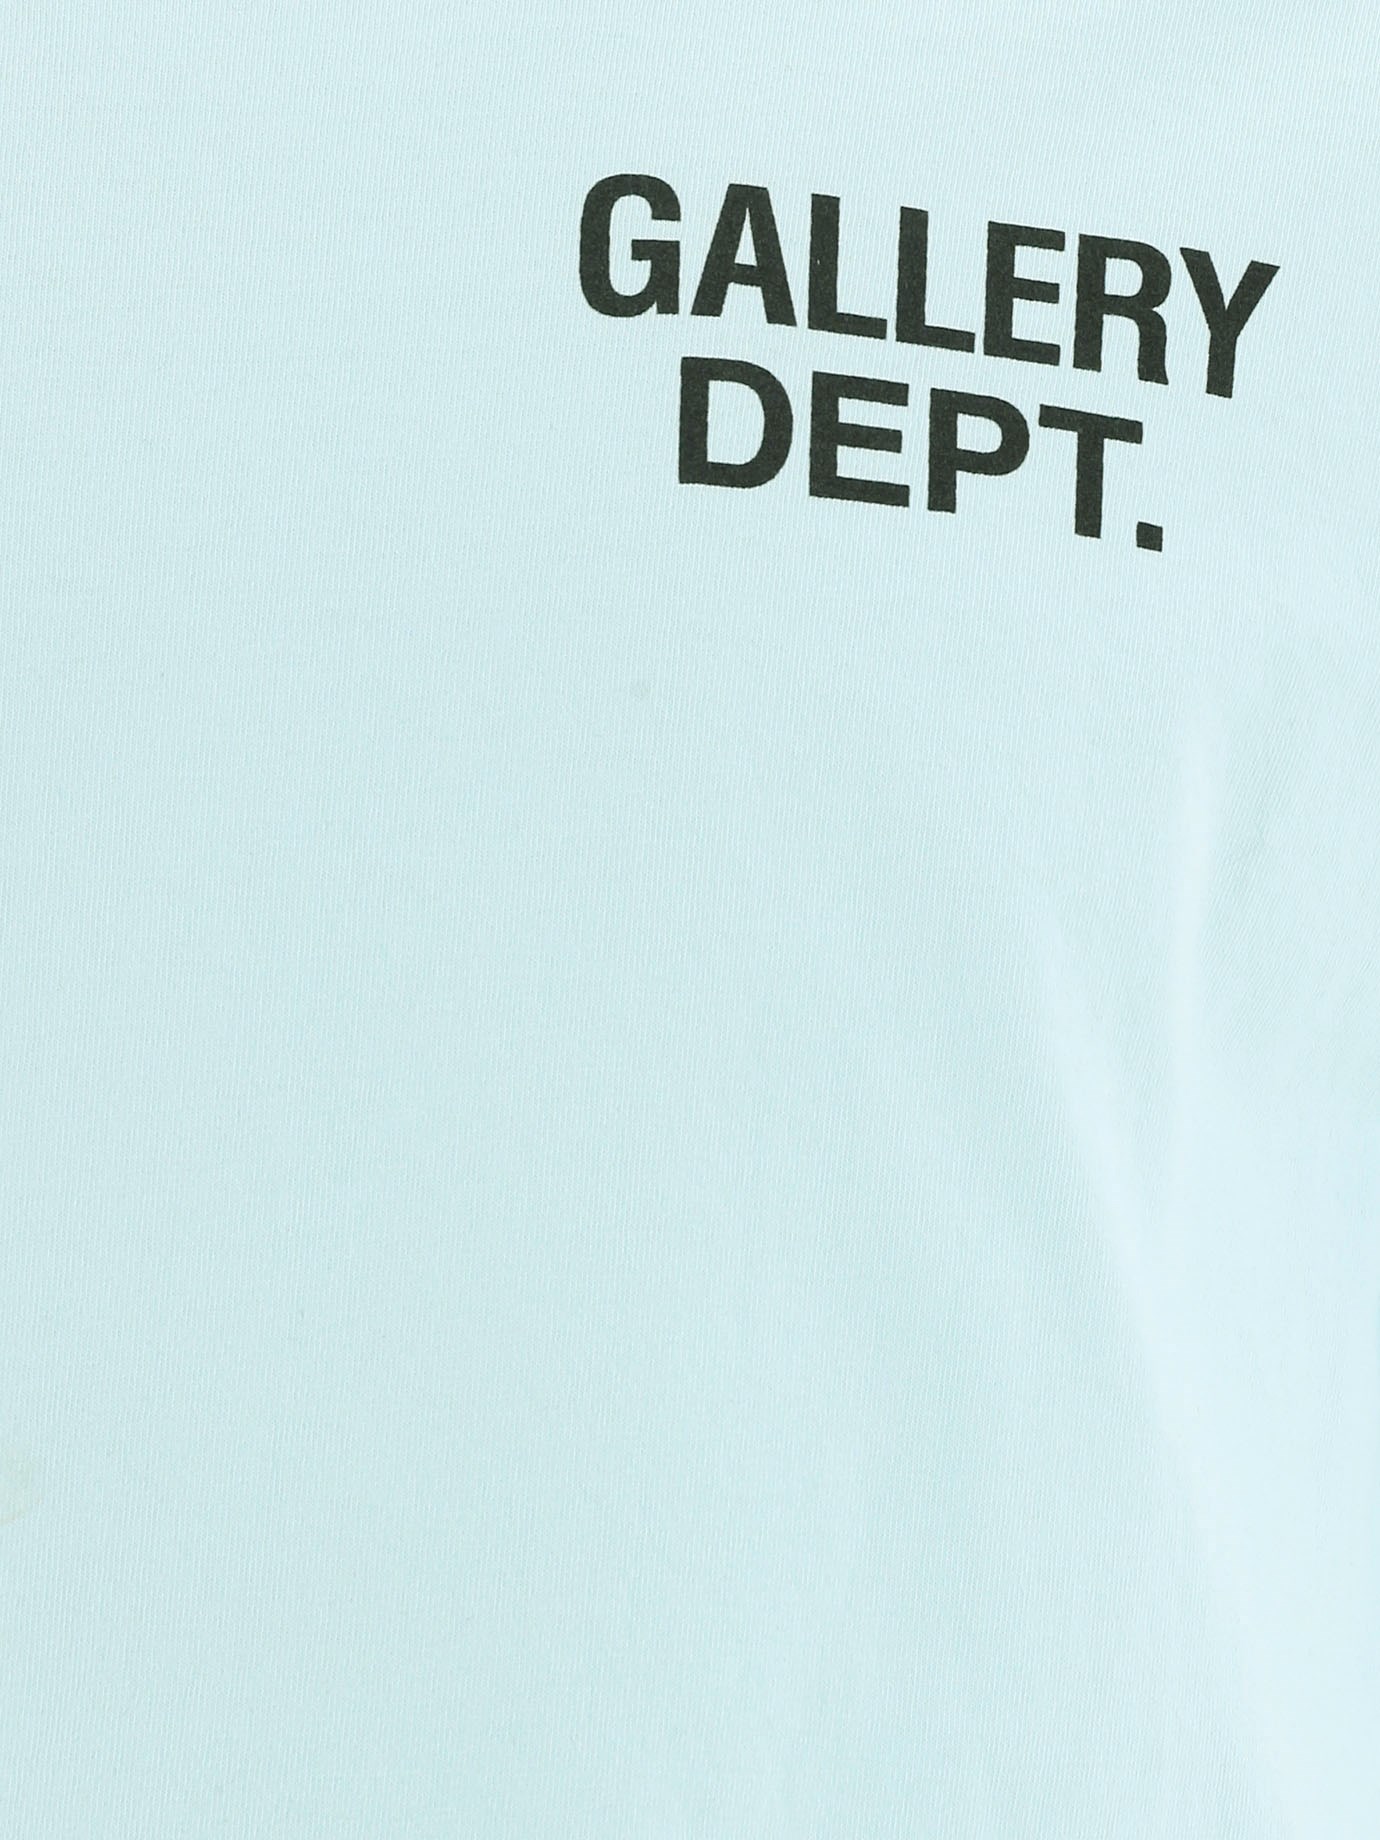 T-shirt  Souvenir  by Gallery Dept.